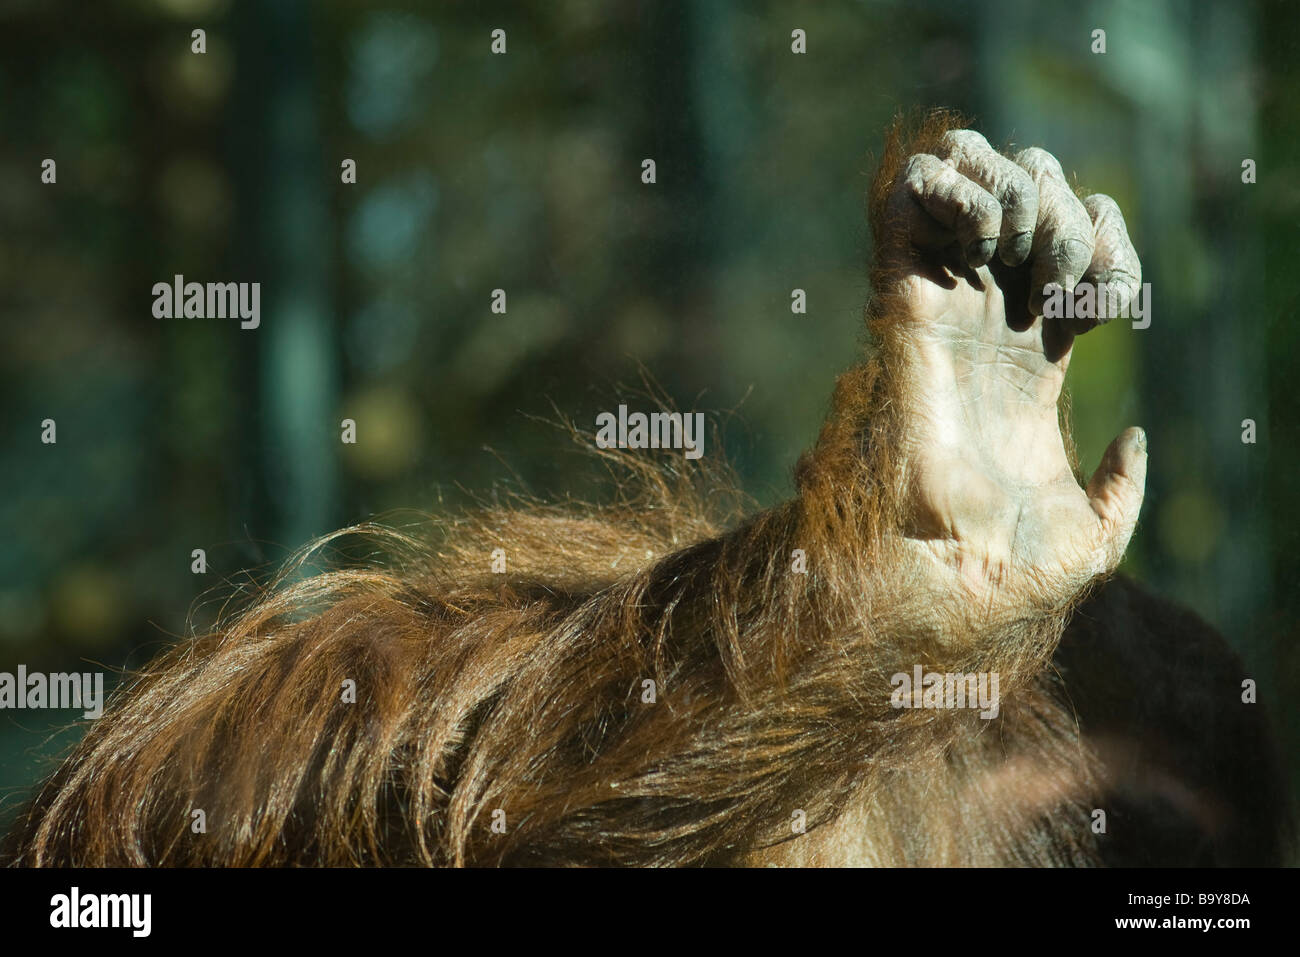 Orangutan (Pongo pygmaeus), hand Stock Photo